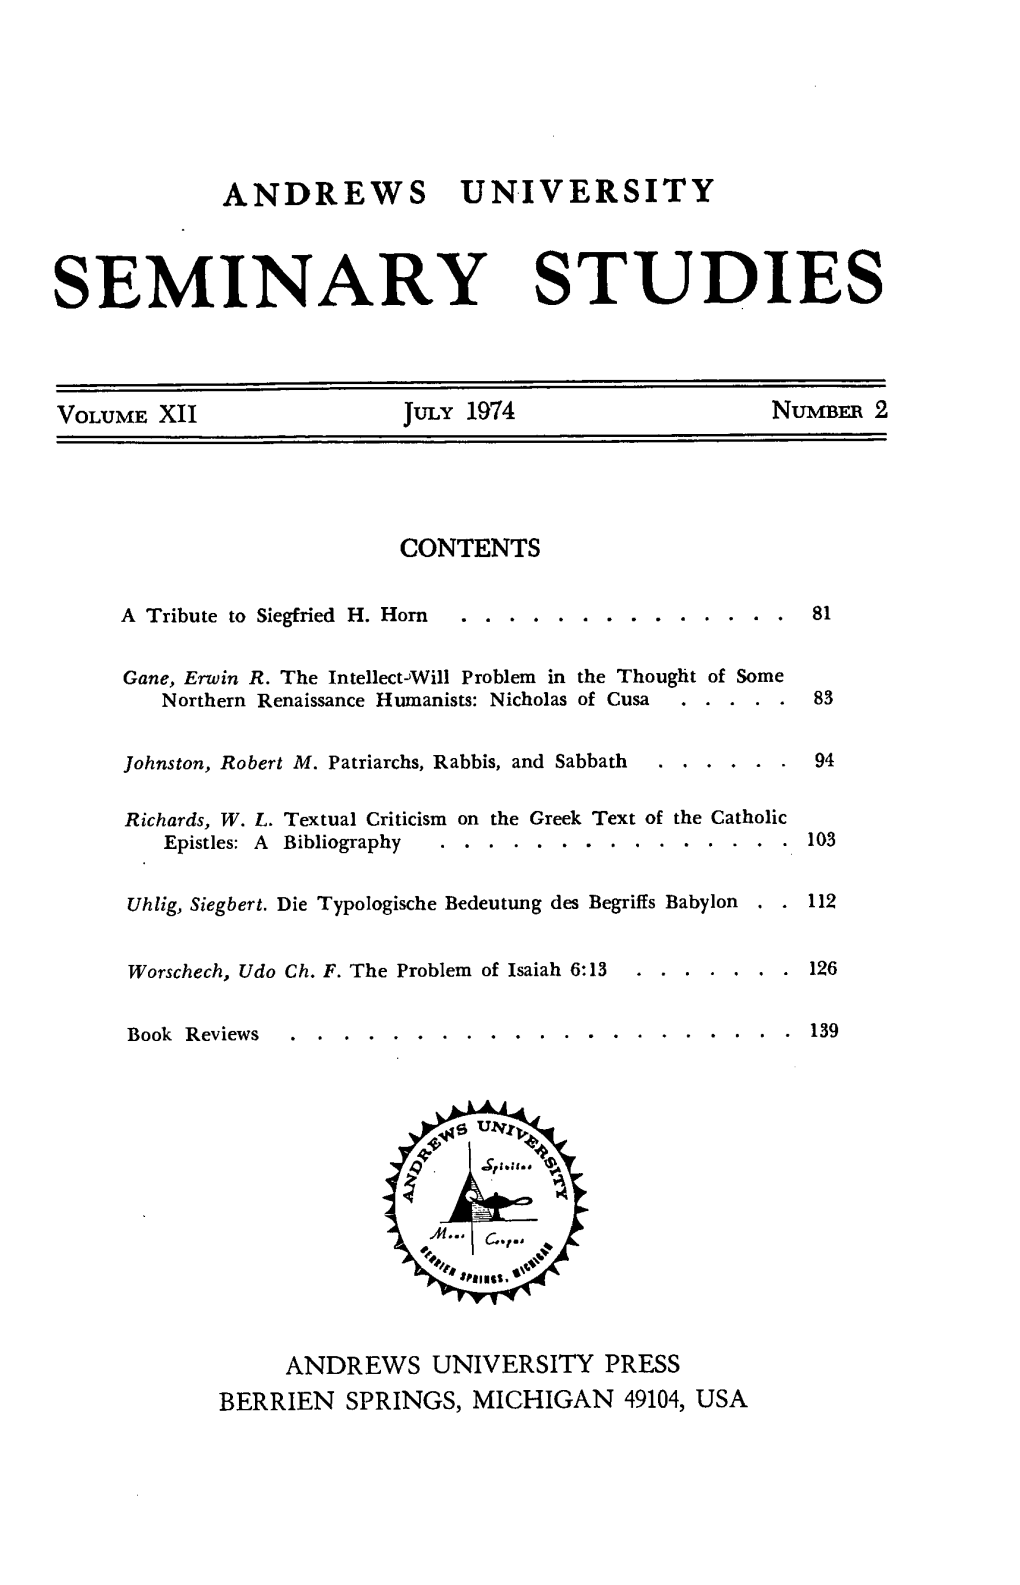 Andrews University Seminary Studies for 1974